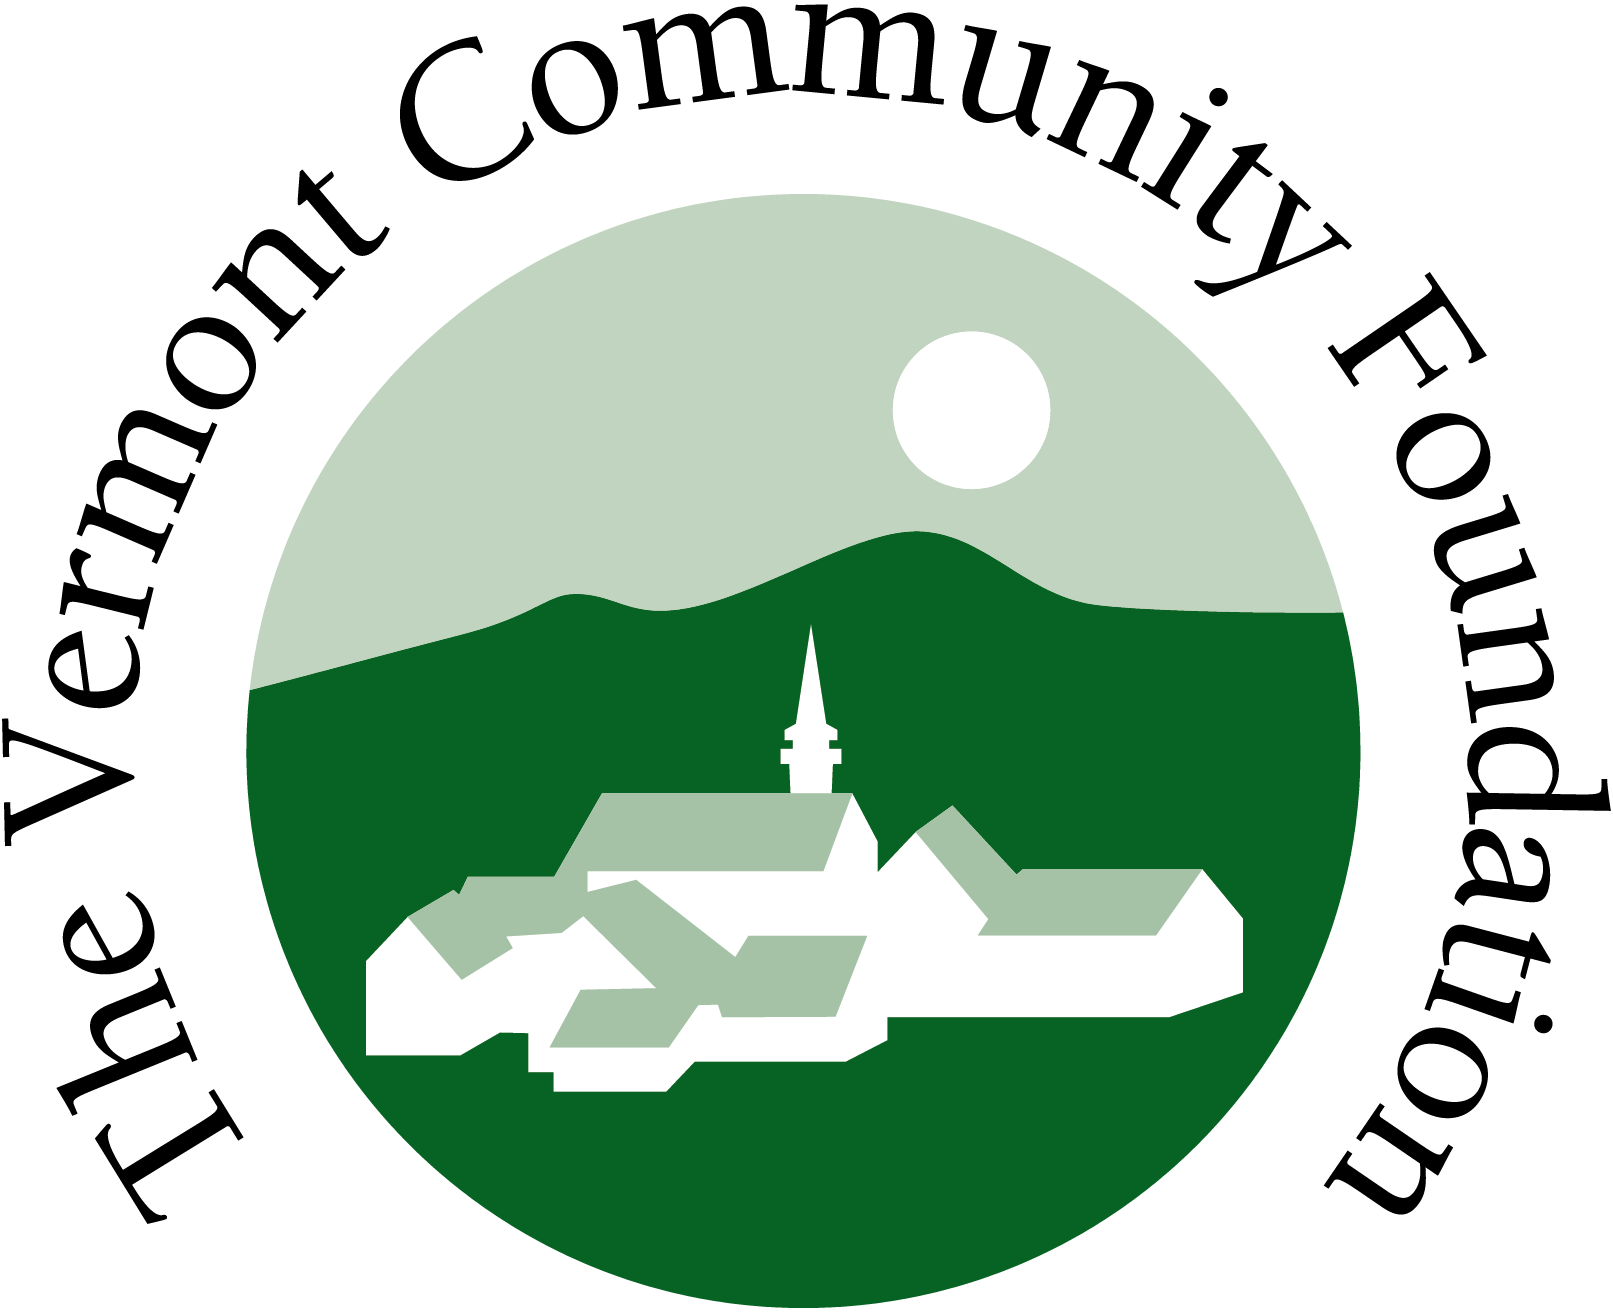 The Vermont Community Foundation logo